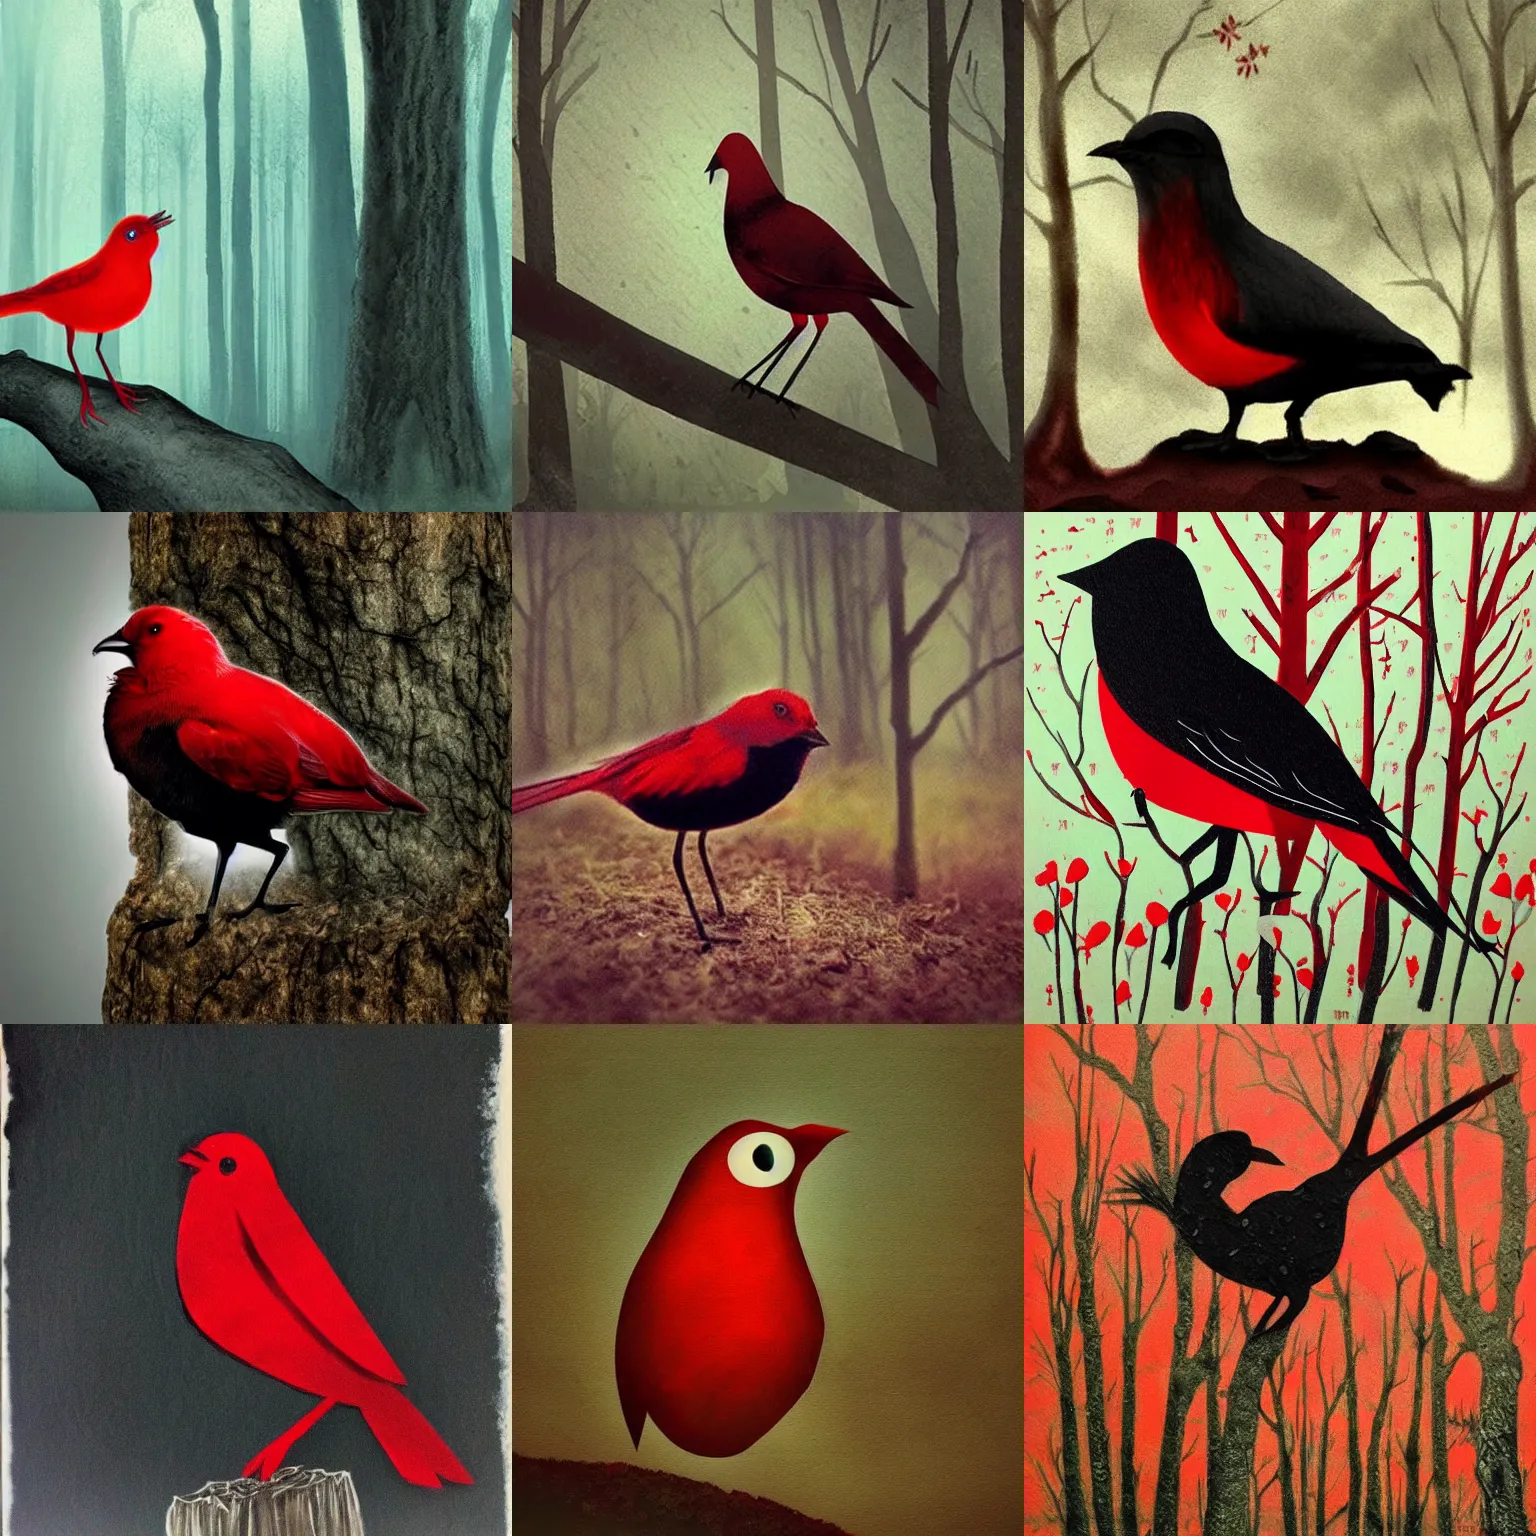 Prompt: red omsk bird with black head in dark mushroom forest eerie foggy art